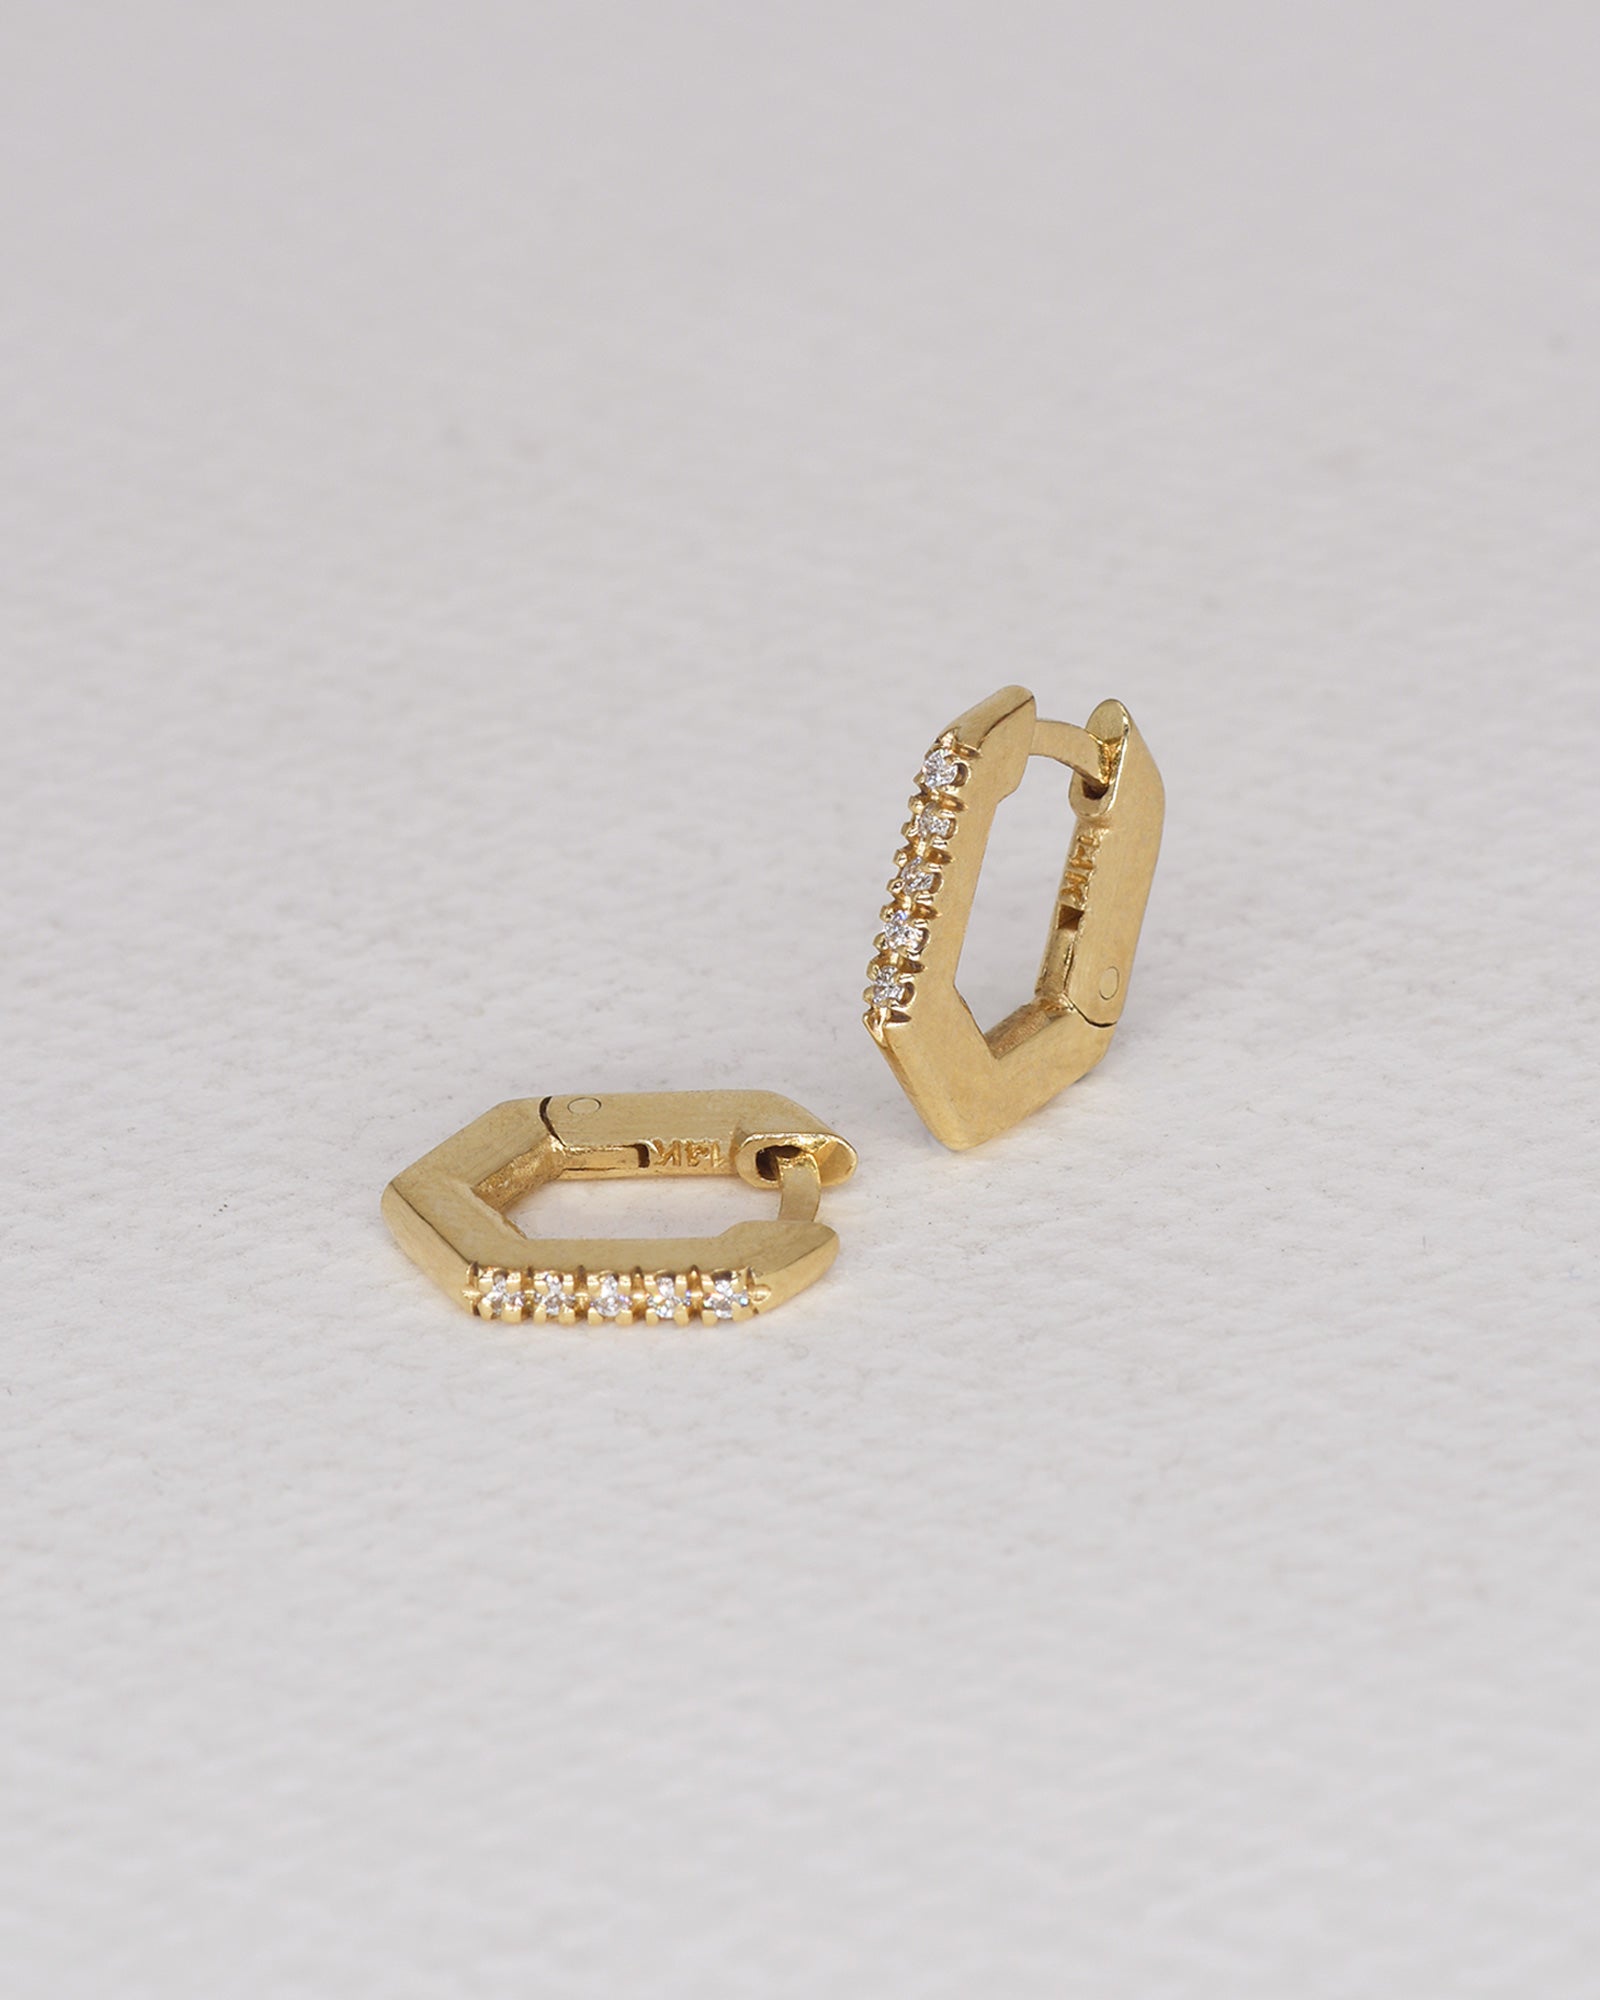 Alex White Diamonds Earrings - Small